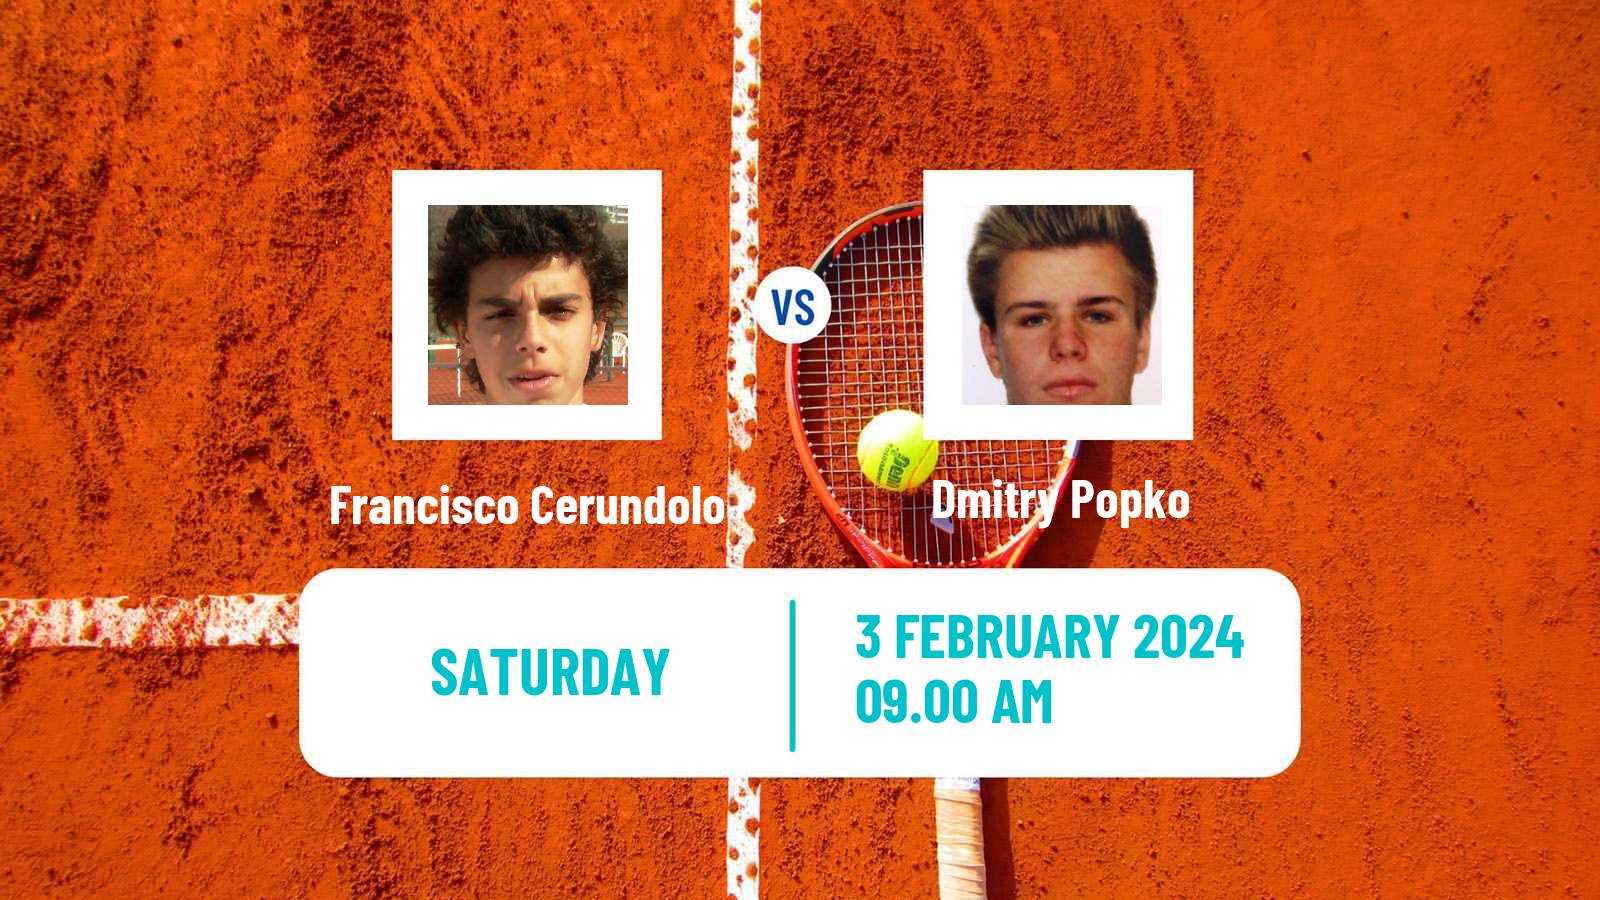 Tennis Davis Cup World Group Francisco Cerundolo - Dmitry Popko